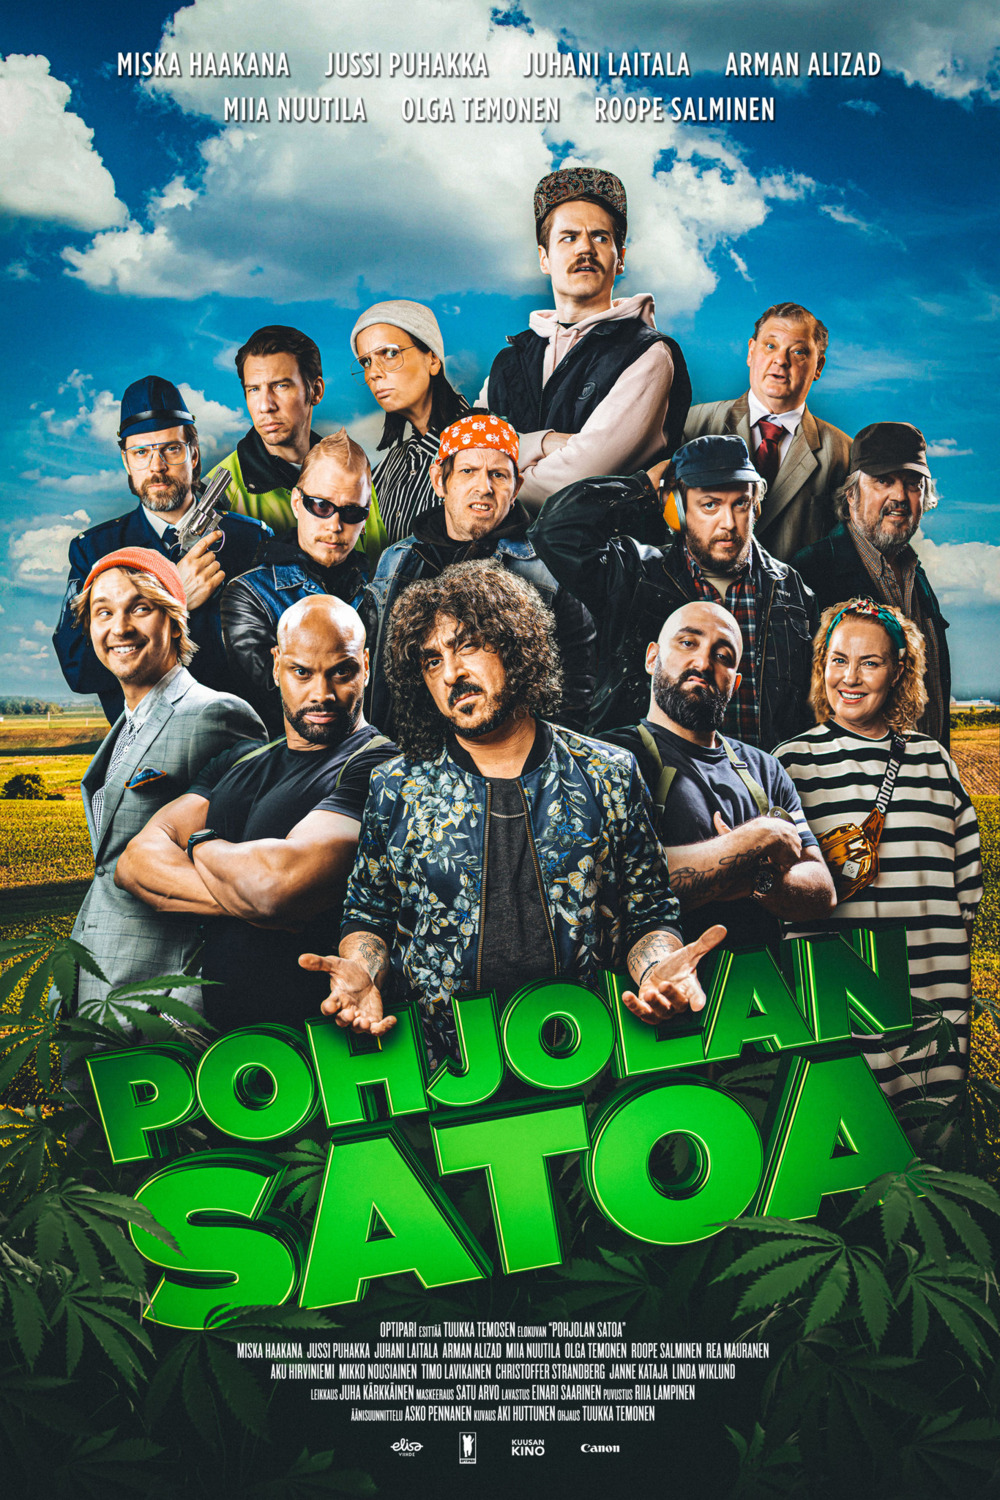 Extra Large Movie Poster Image for Pohjolan satoa 